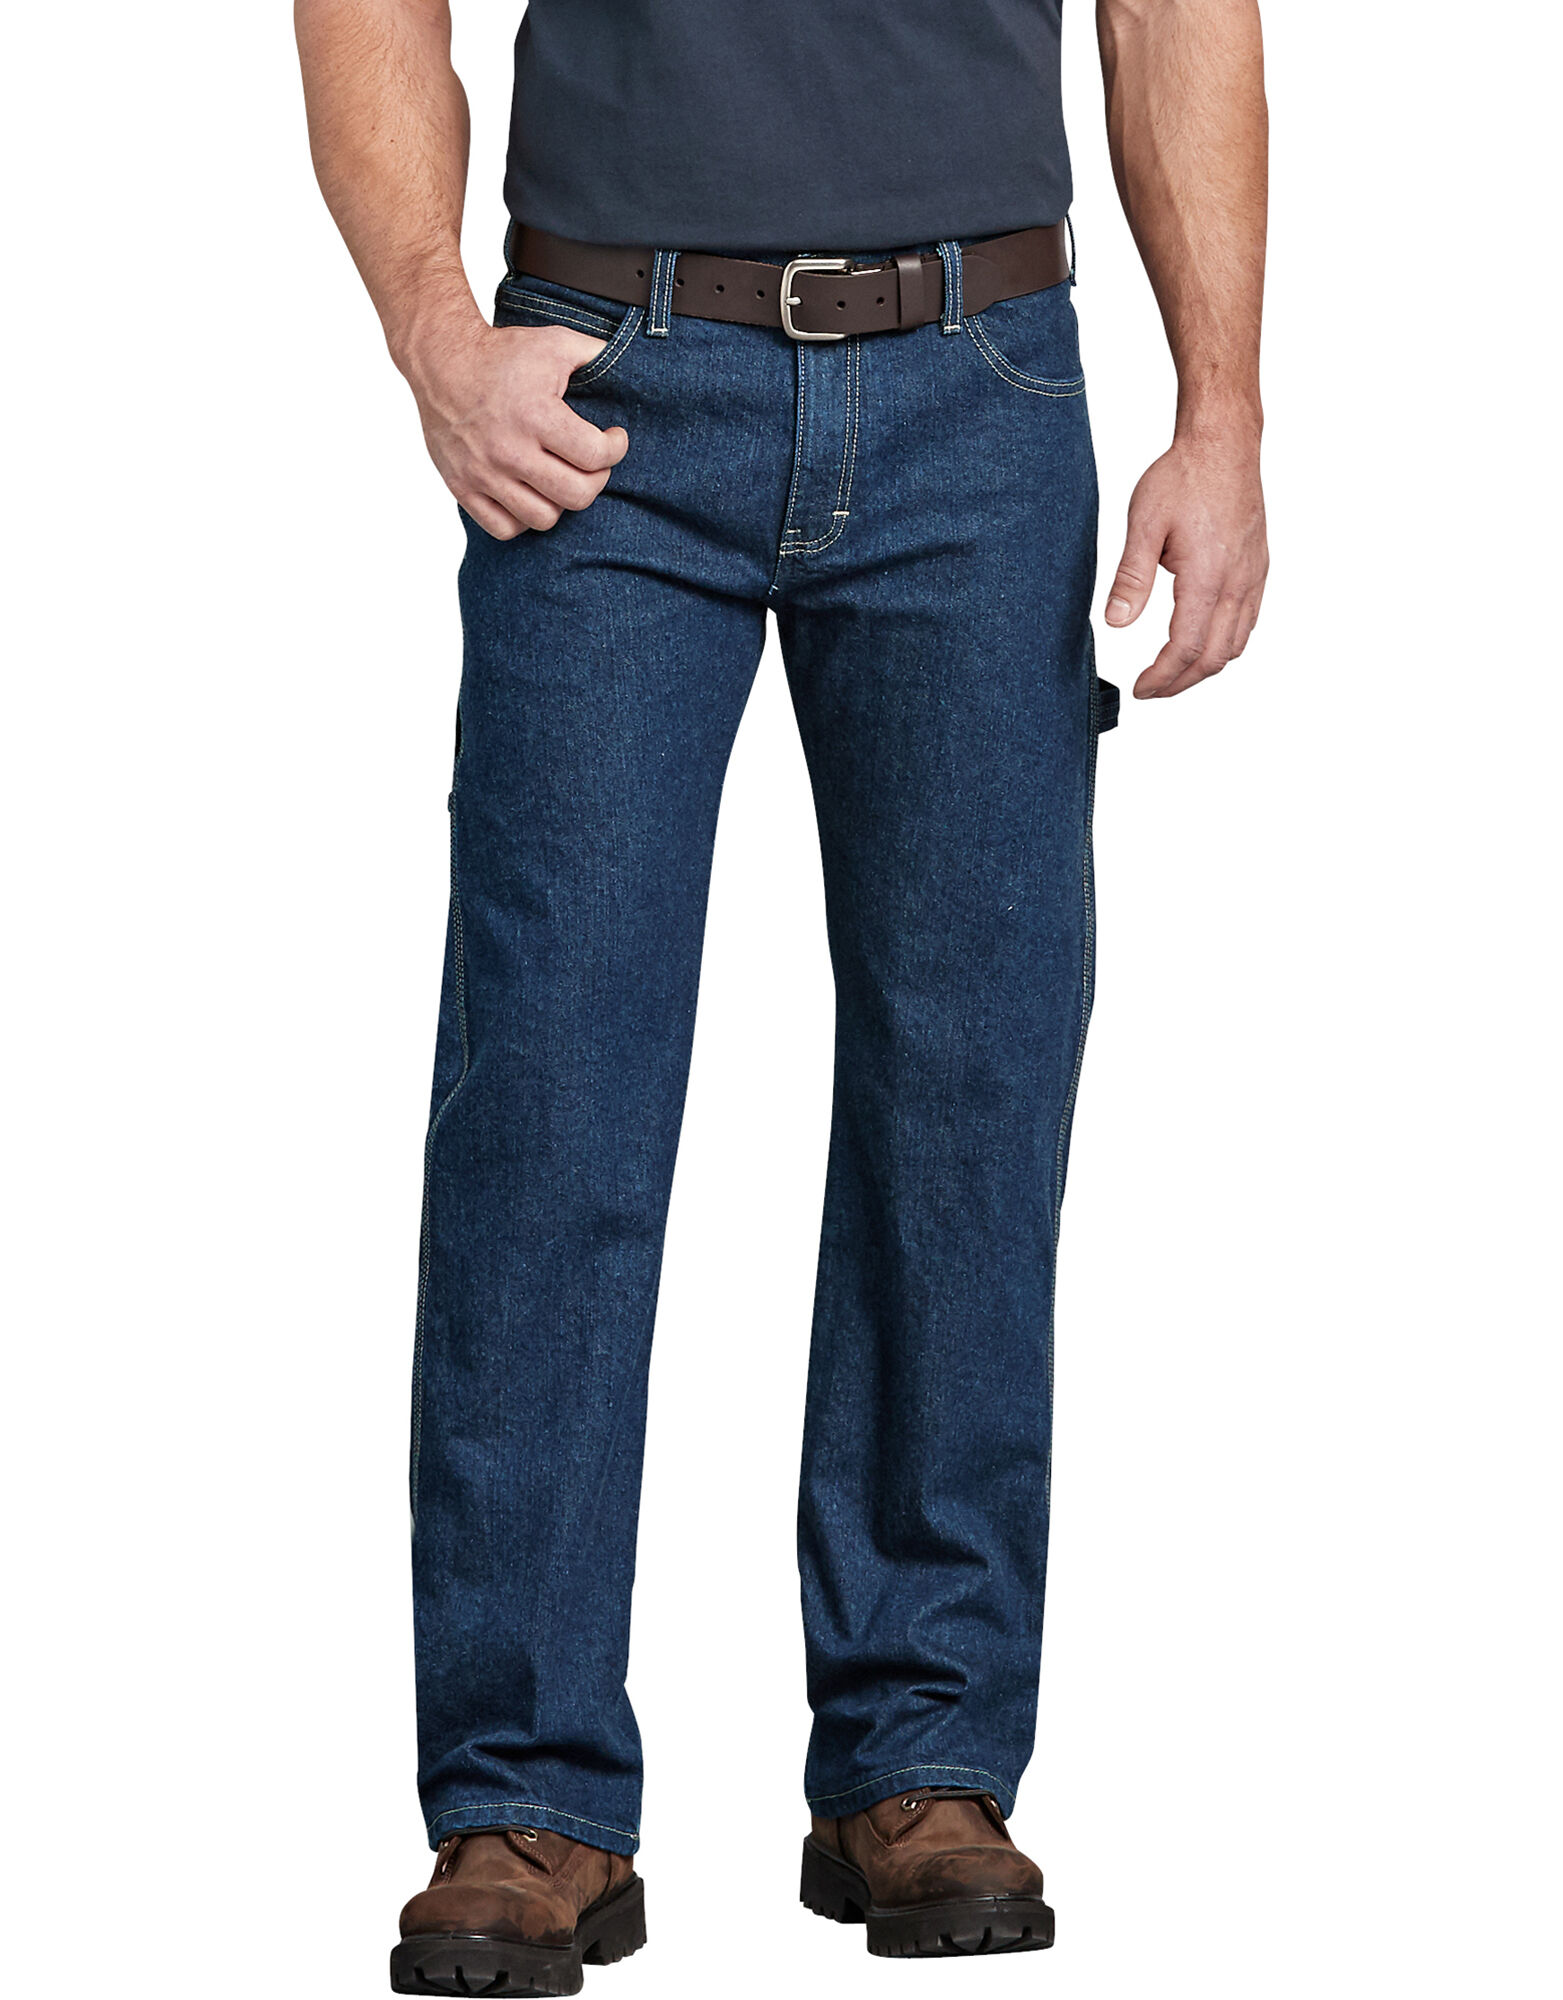 flex carpenter jeans